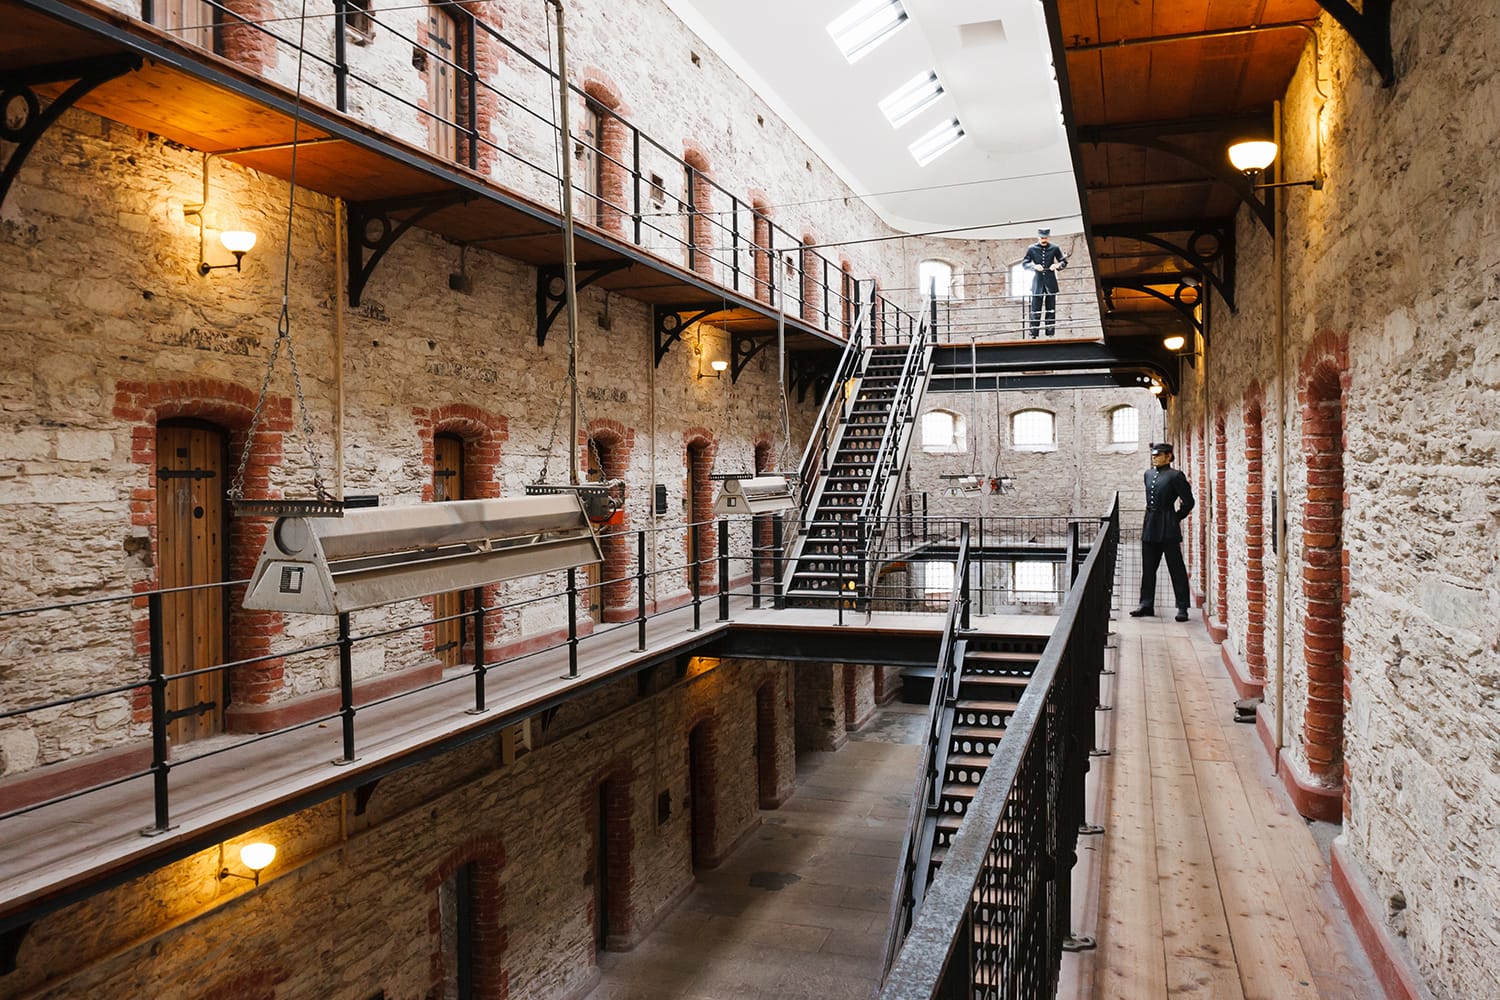 City Gaol in Cork, Ireland